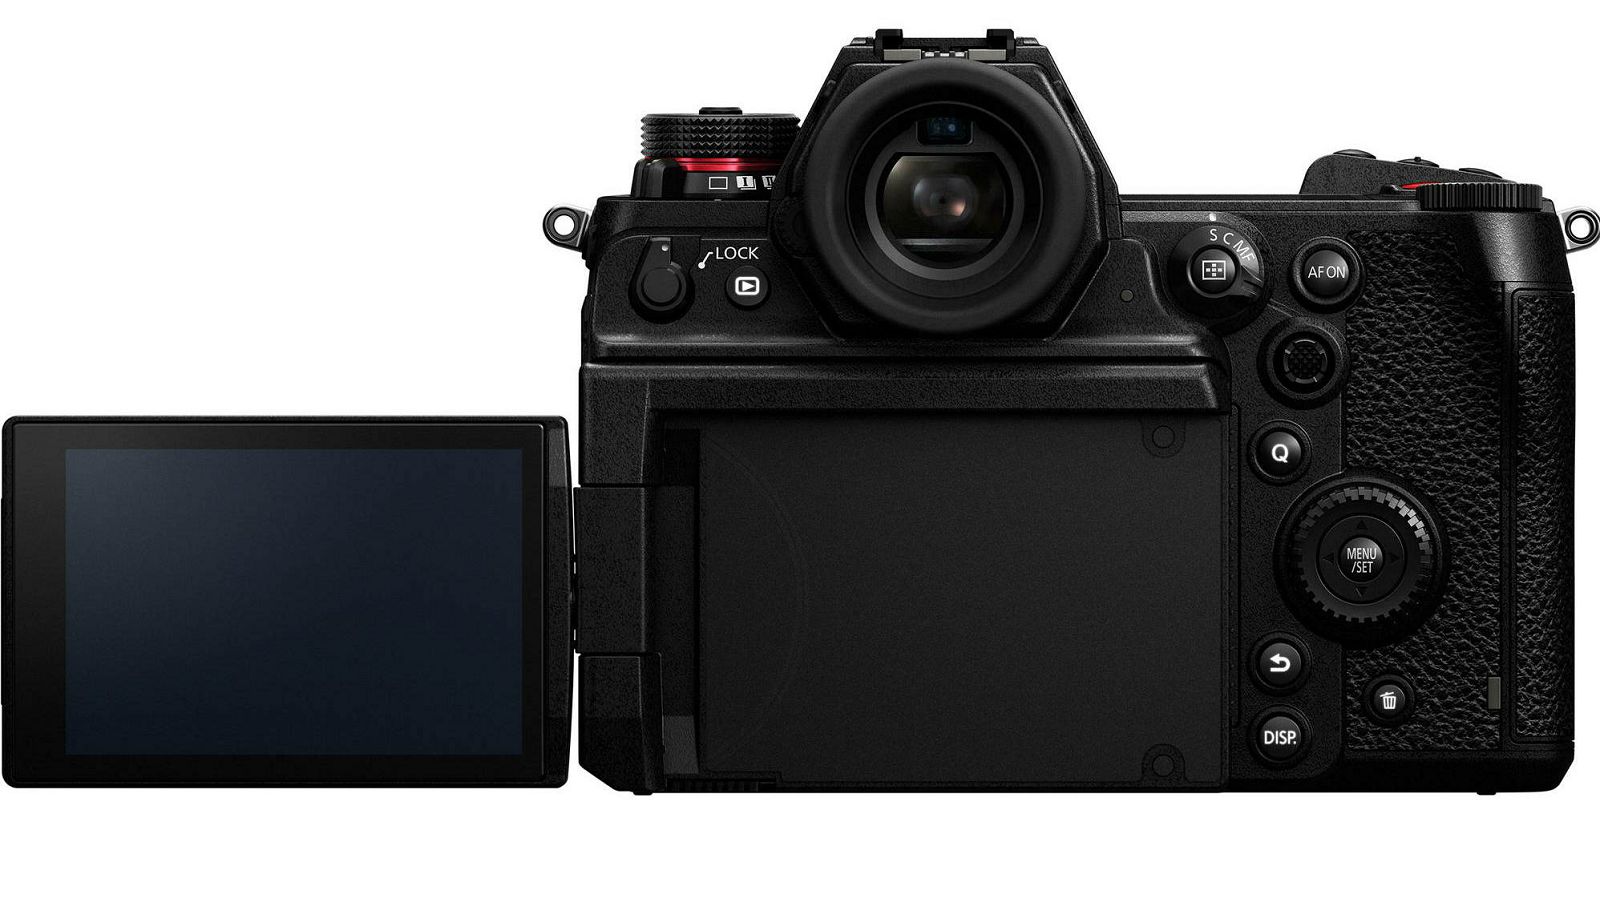 Panasonic Lumix S1H Body 4K Mirrorless bezrcalni digitalni fotoaparat tijelo DC-S1HE Full Frame Digital Camera (DC-S1HE-K)